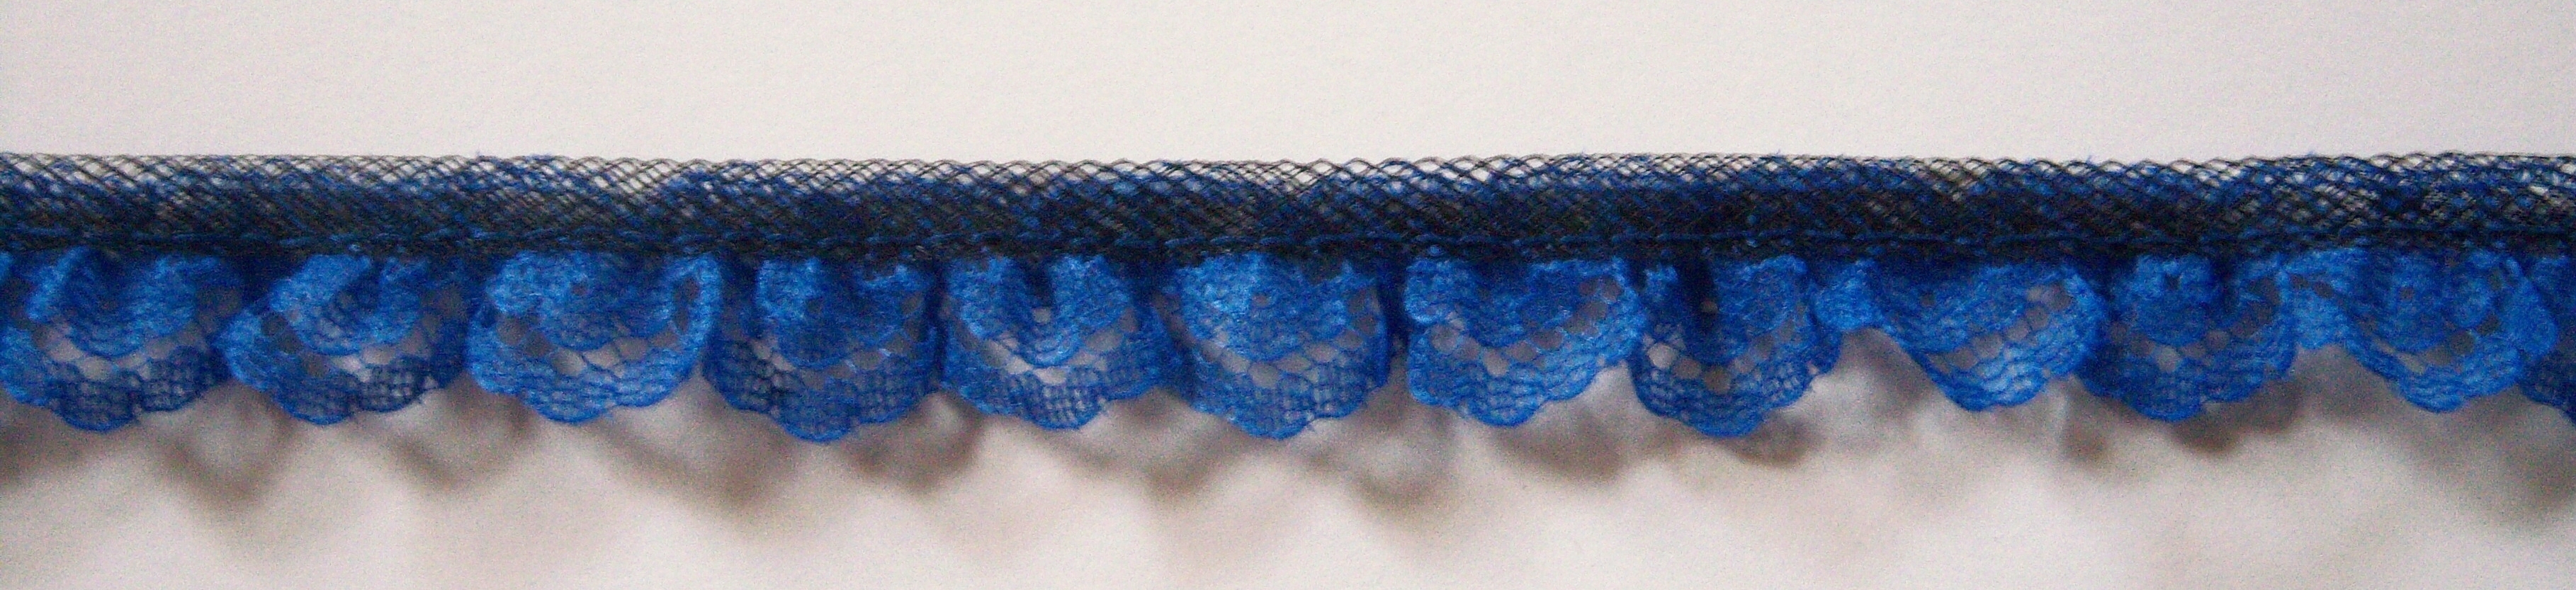 Royal Blue 3/4" Ruffled Lace